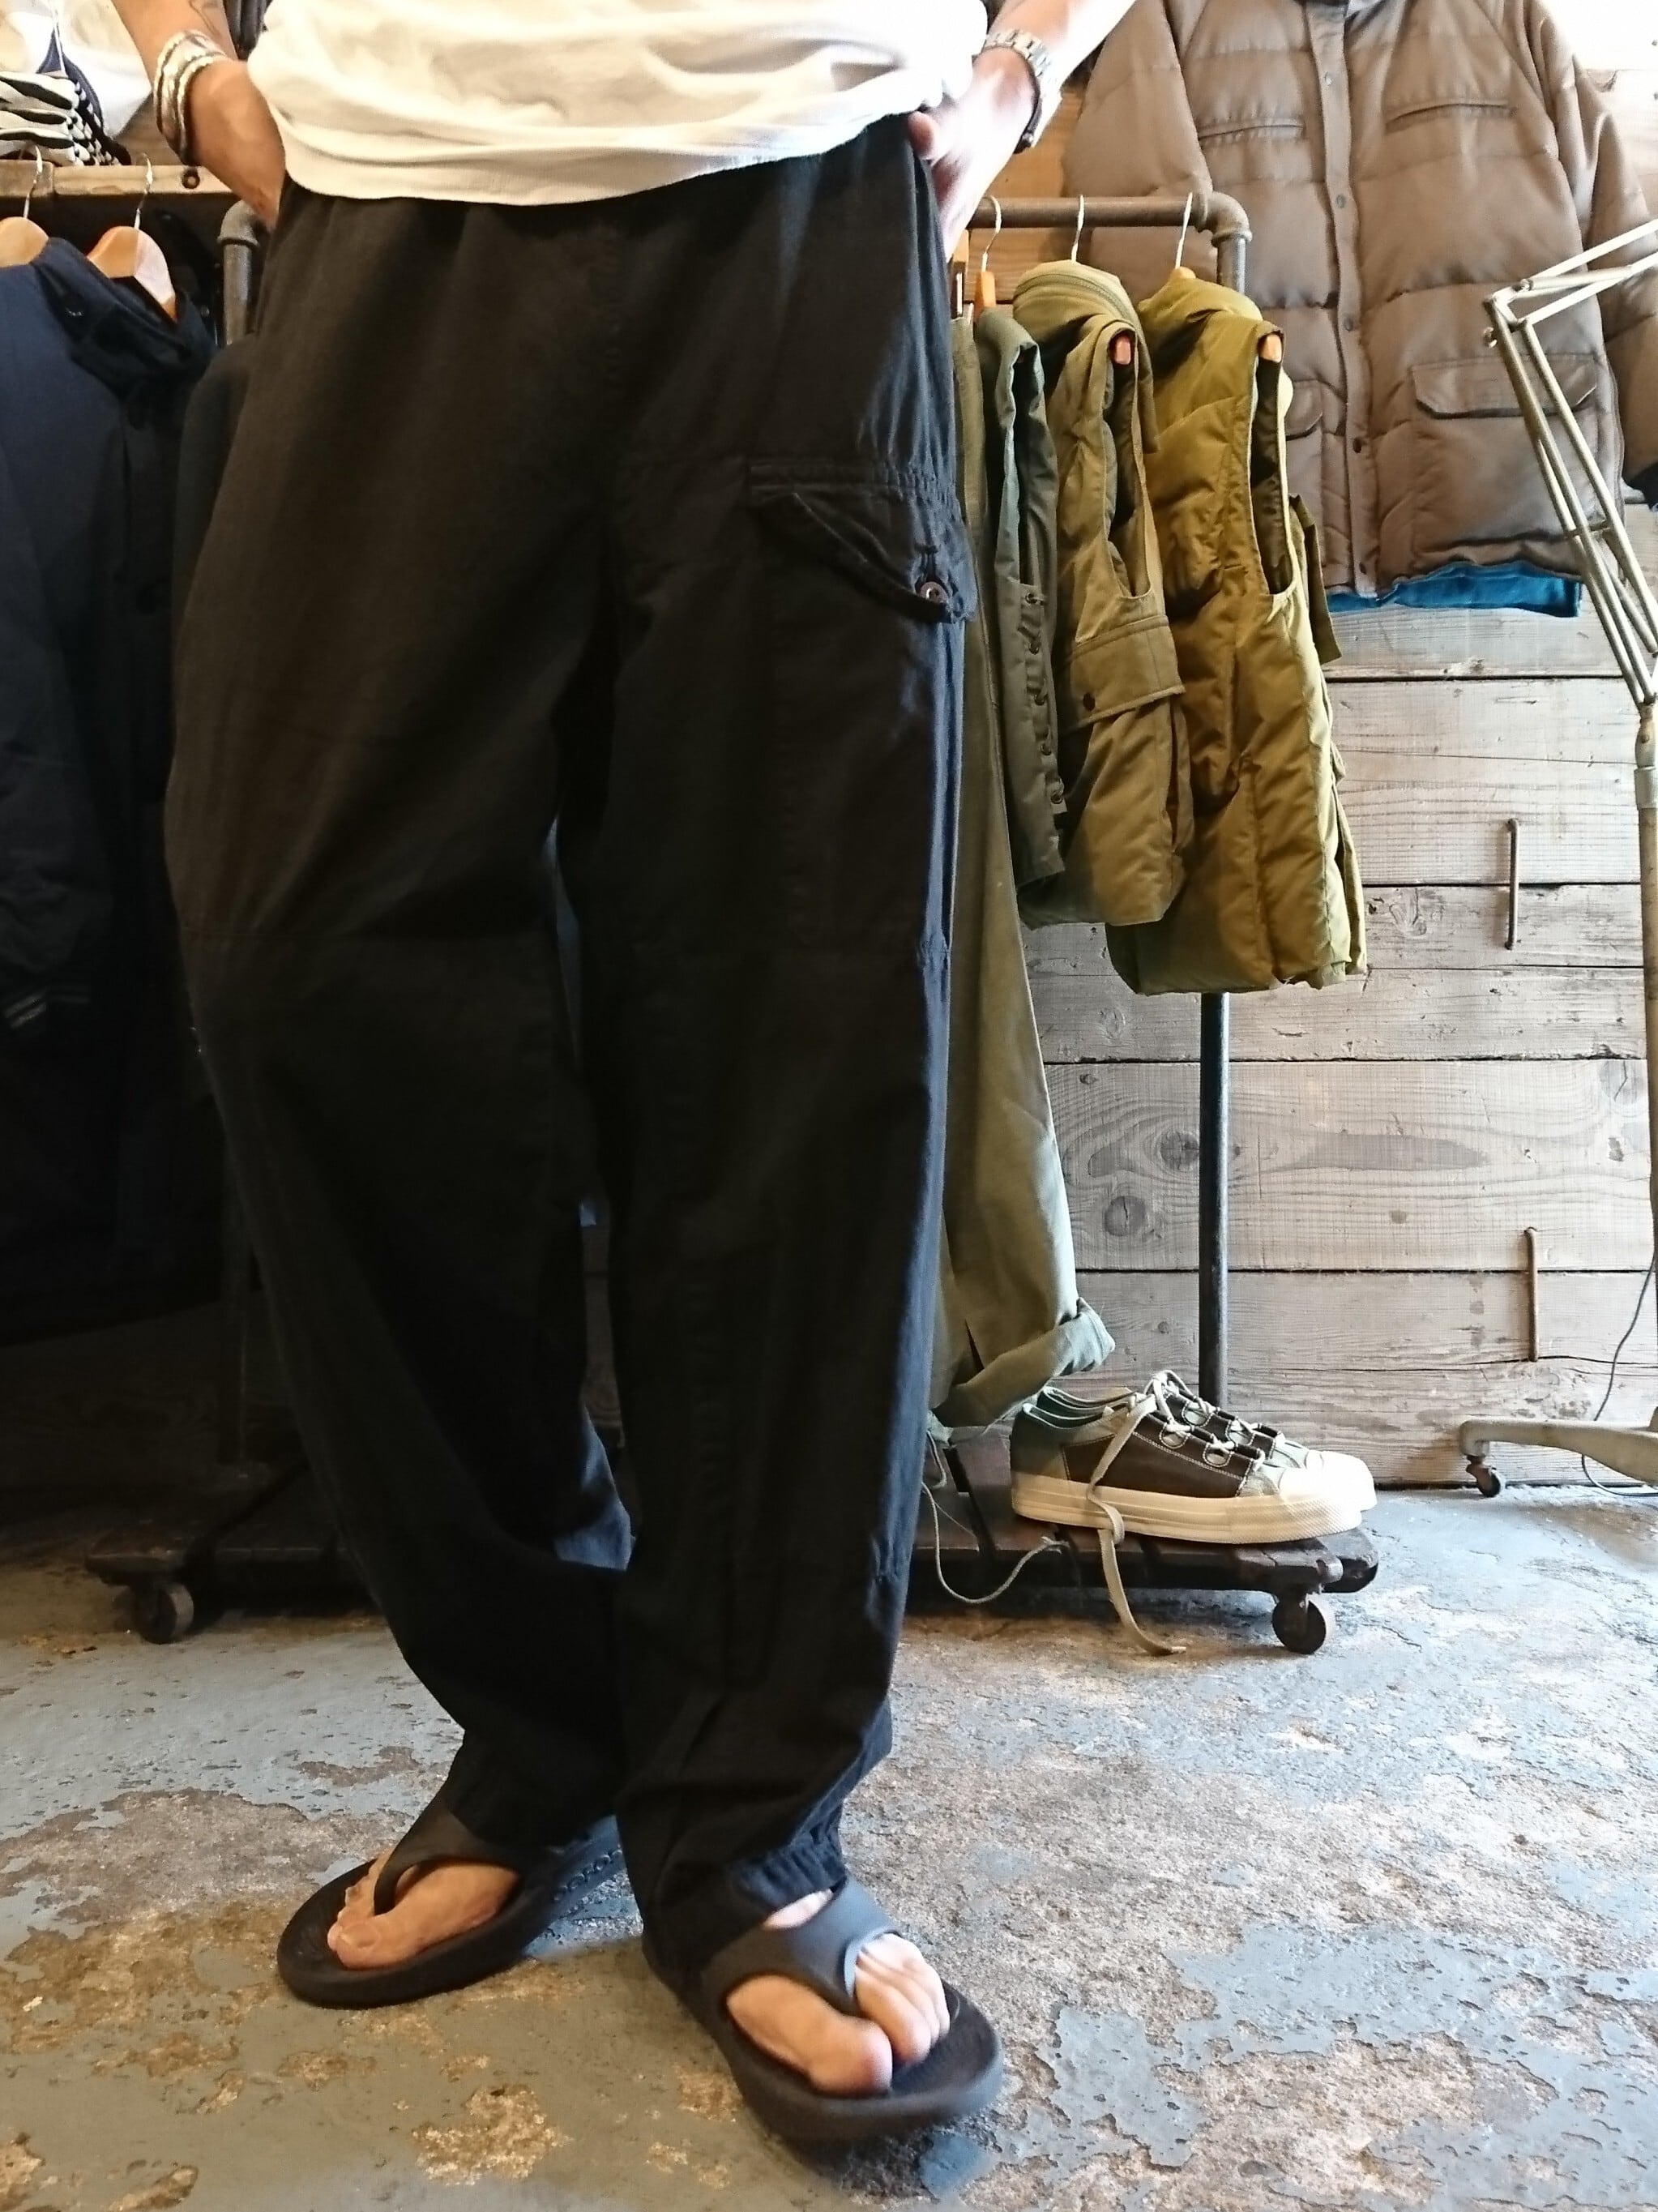 40‘s SAS British army brushcamo trousers